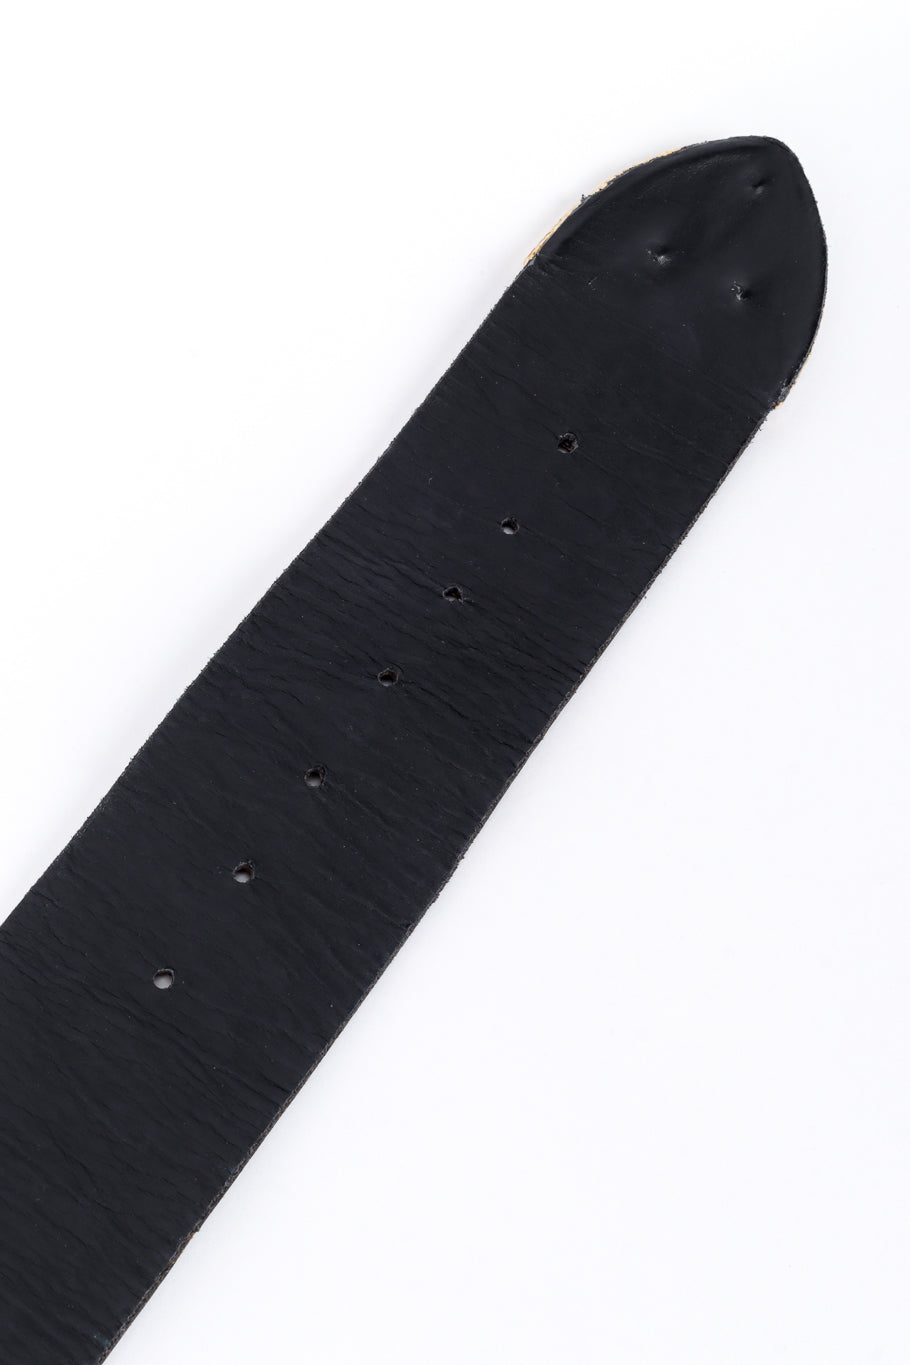 Vintage Michael Morrison MX Aurora Crystal Studded Belt back of holes @recess la